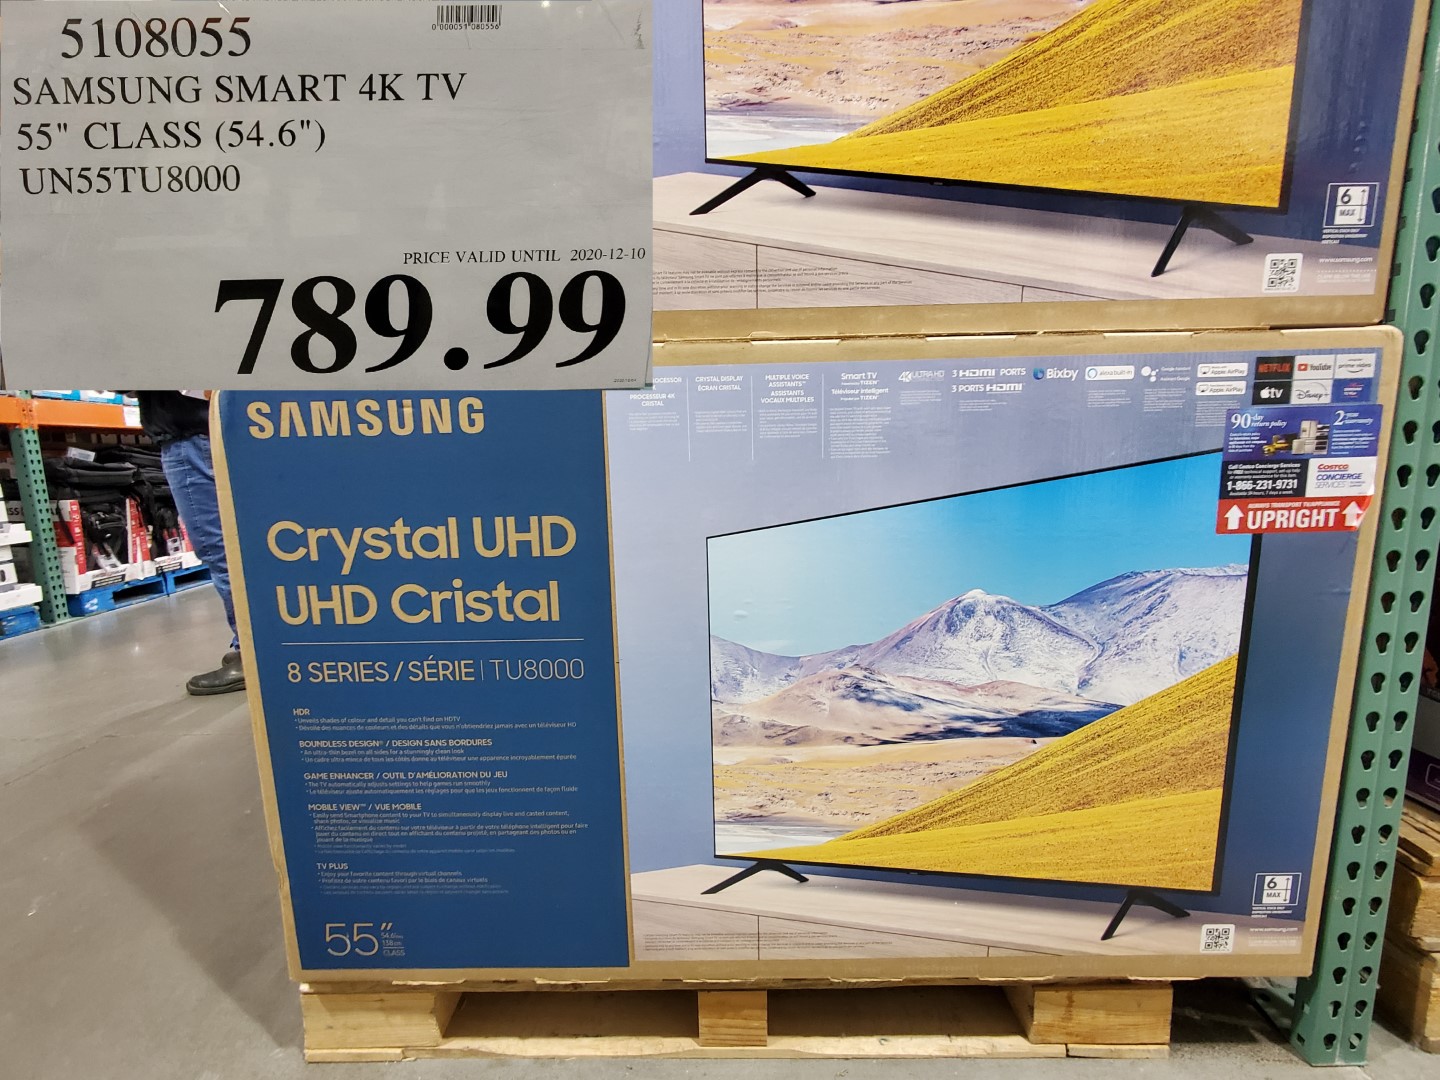 Samsung Crystal UHD TV